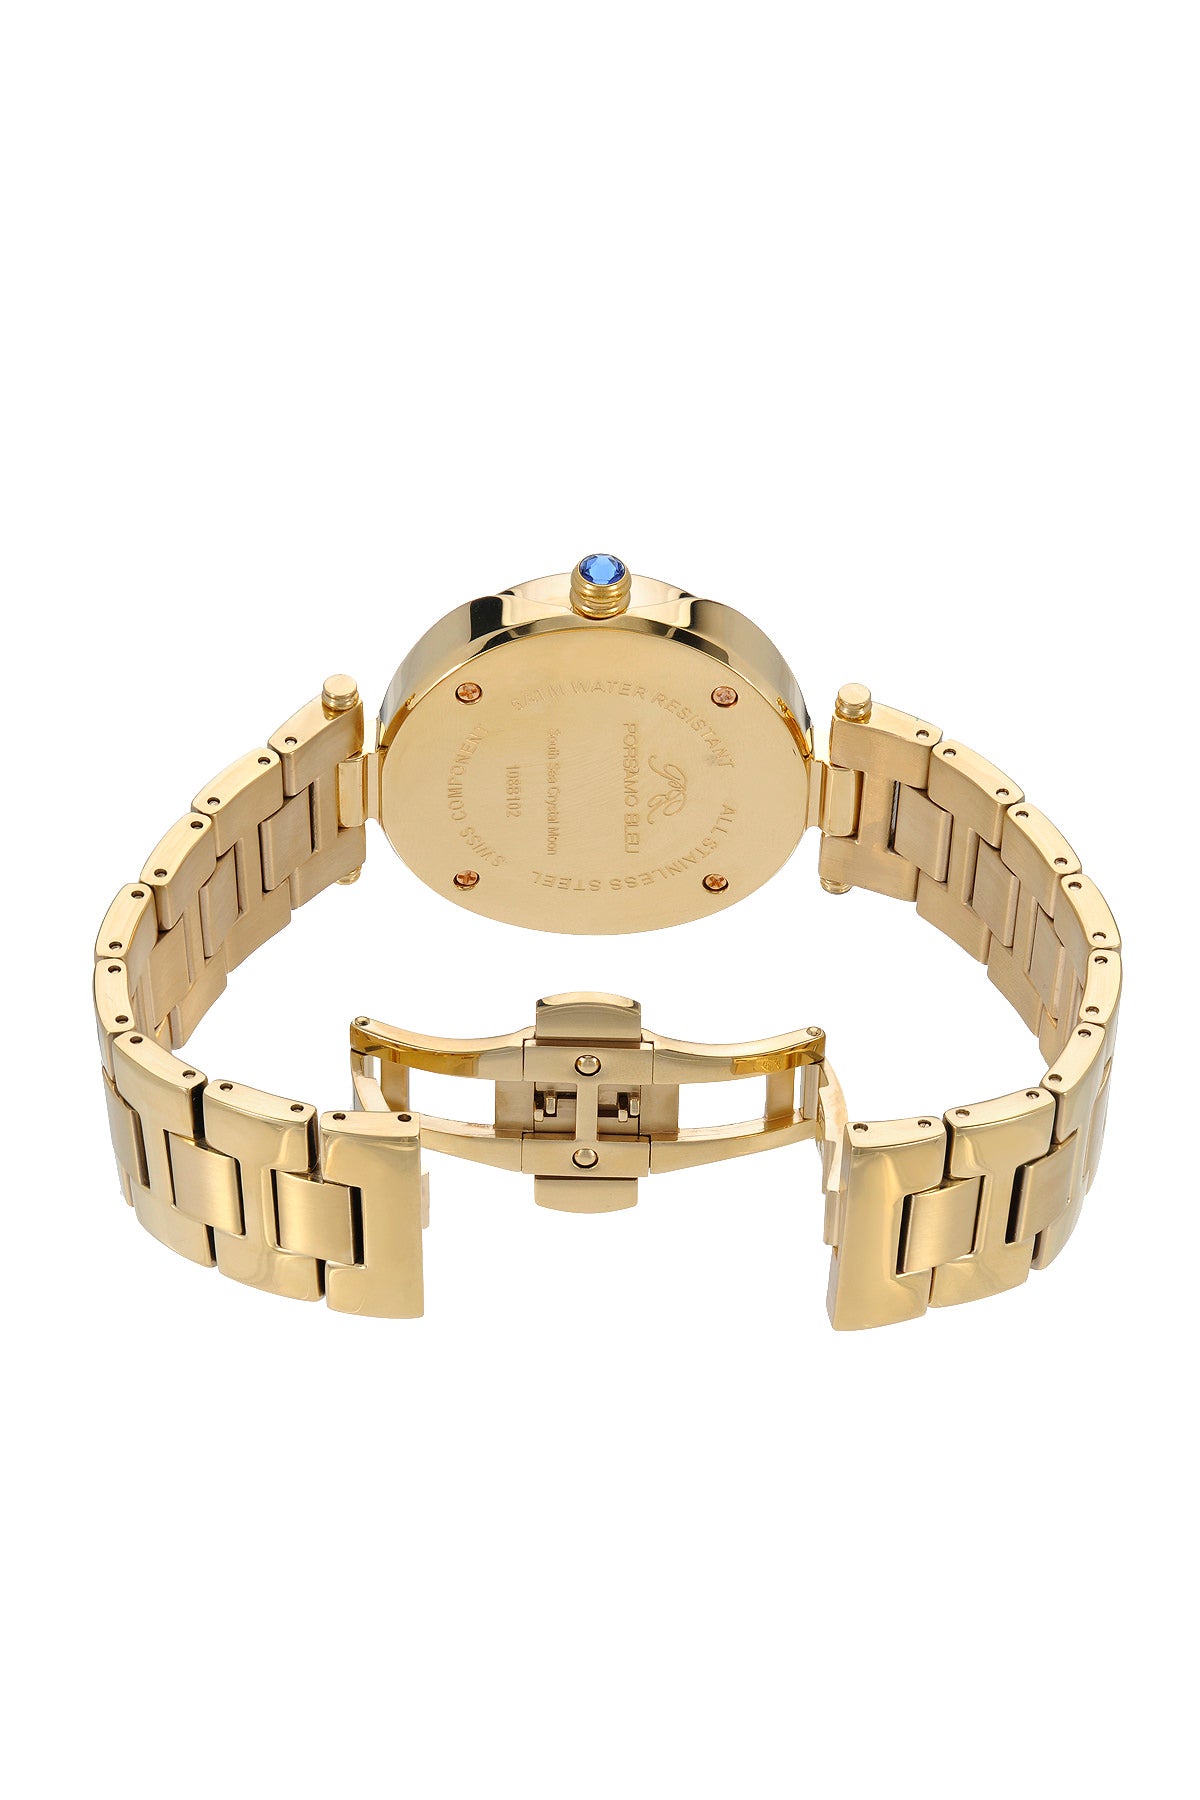 Porsamo Bleu South Sea Crystal Moon Luxury Women's Stainless Steel Watch, Gold 108BSSM